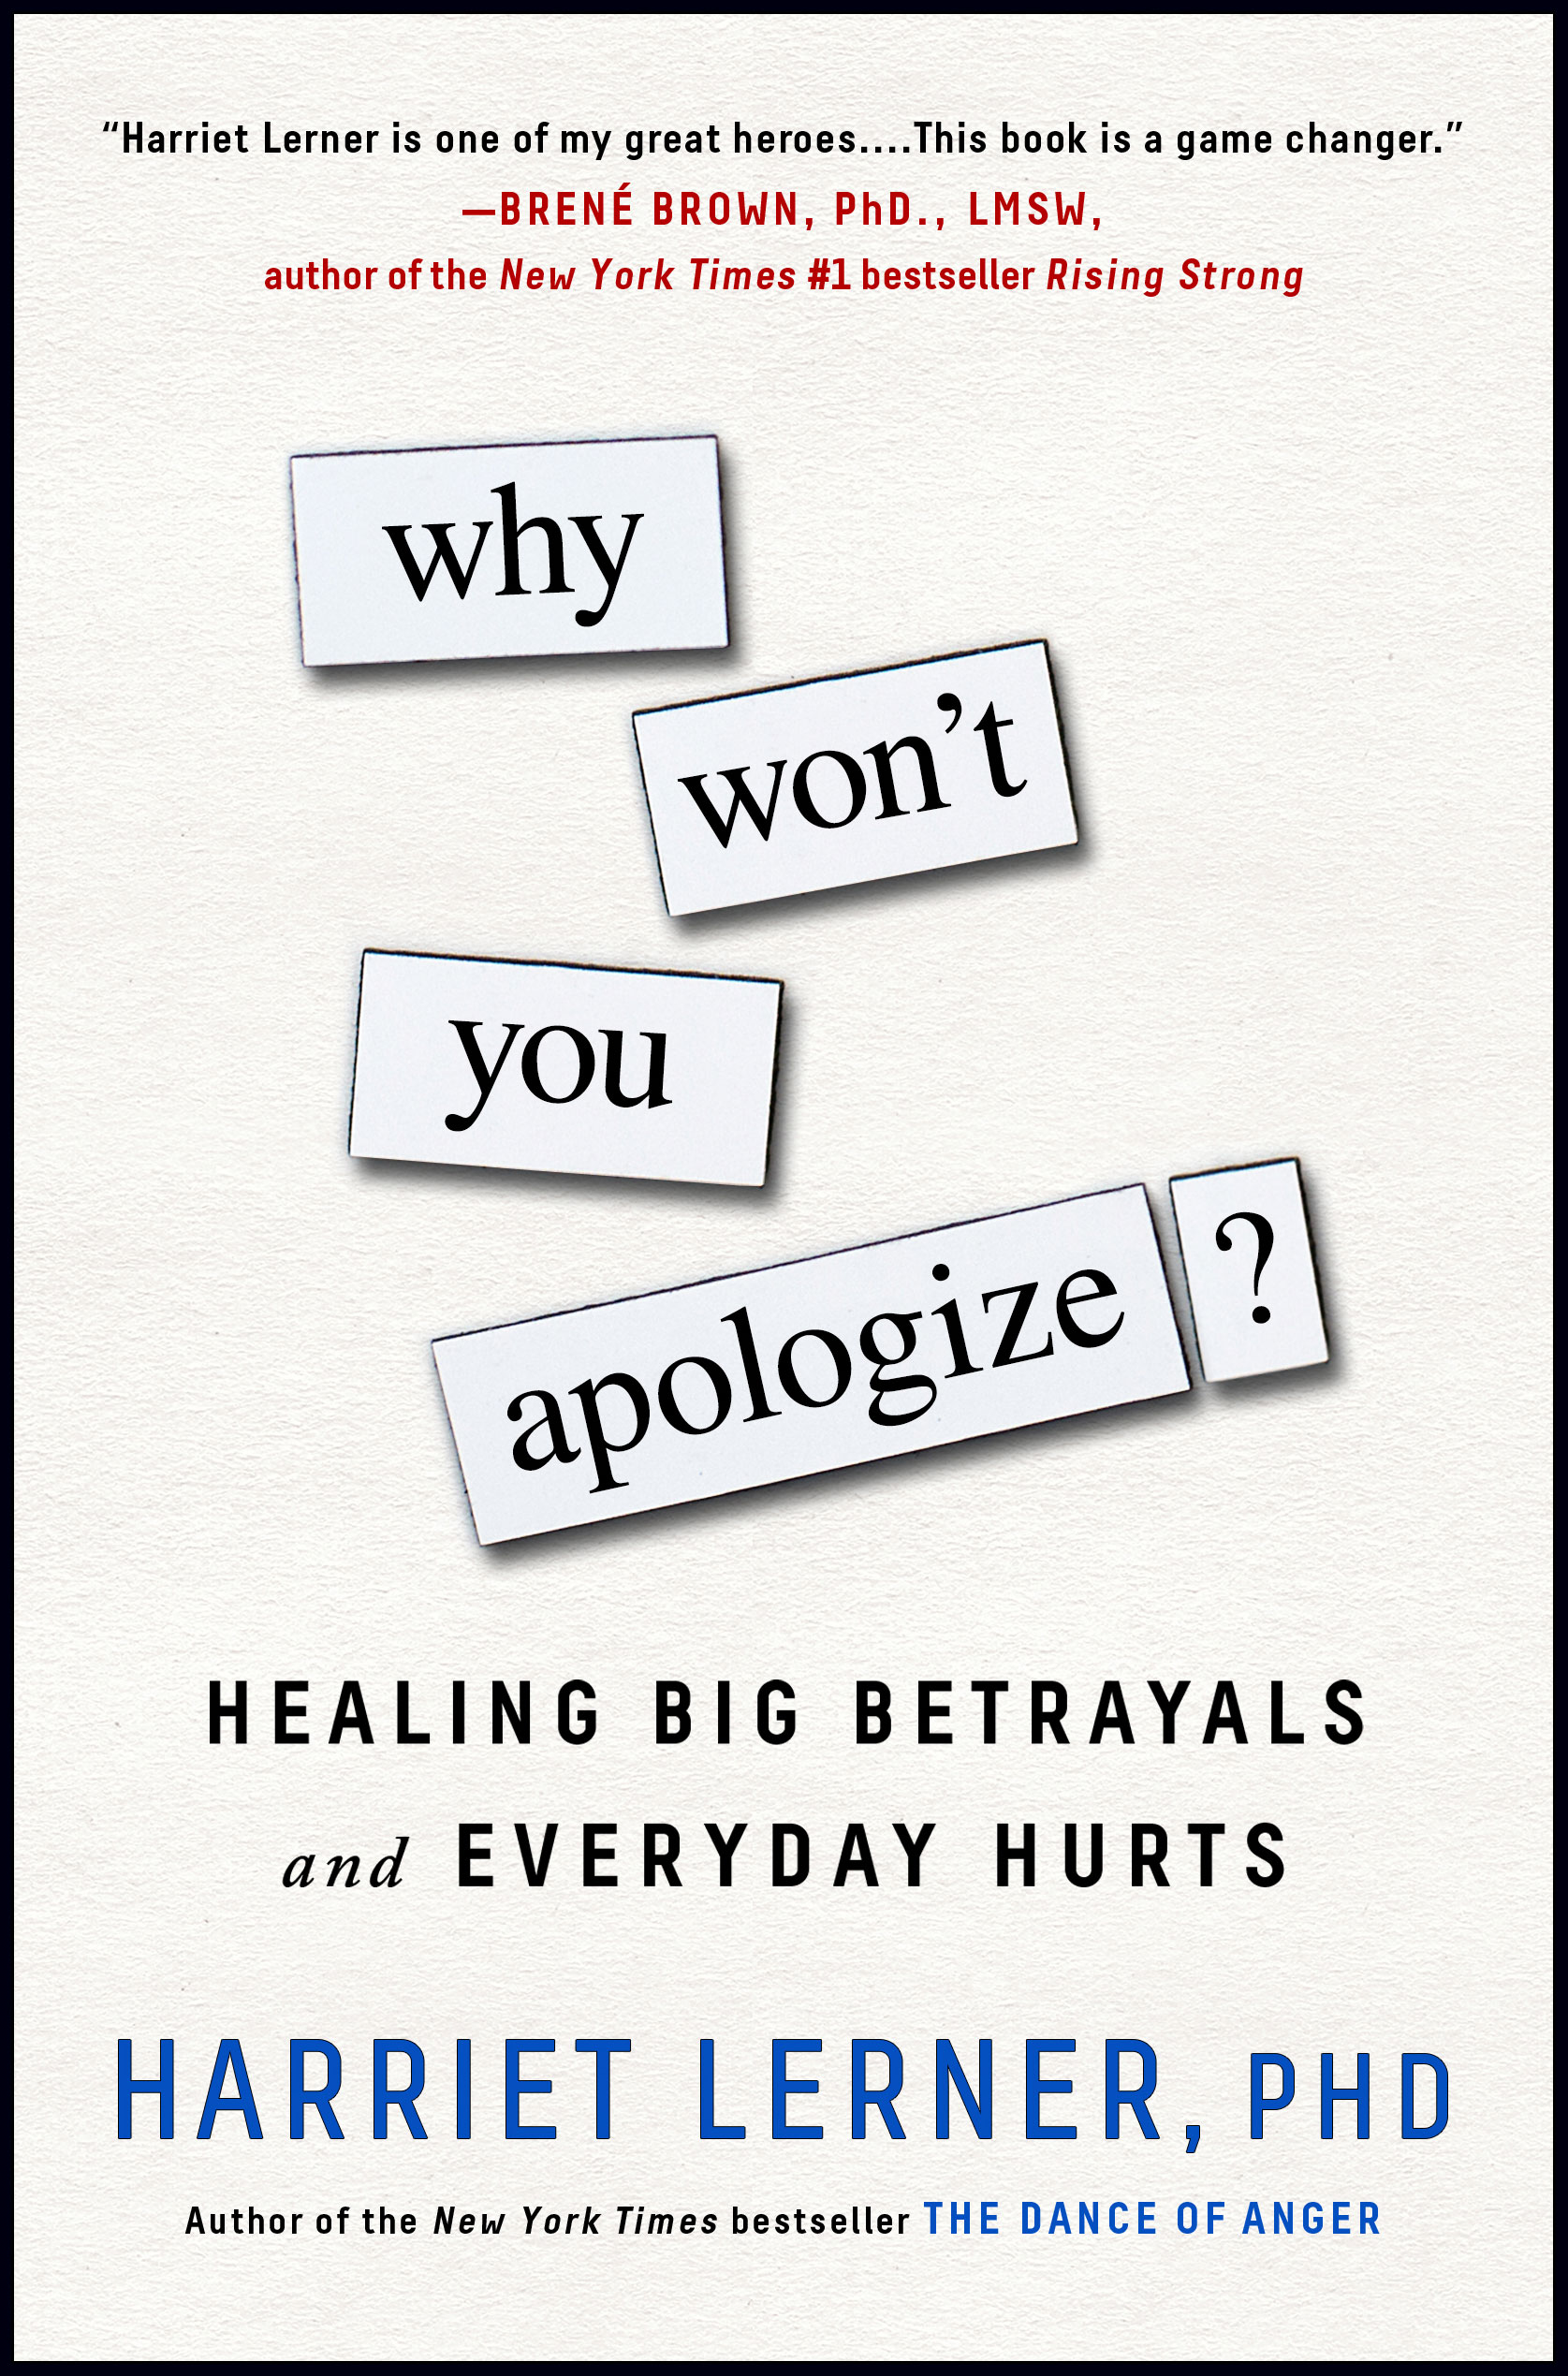 You should apologize. Apologize. You apologize wont have. Book why Ukraine wins it wont.